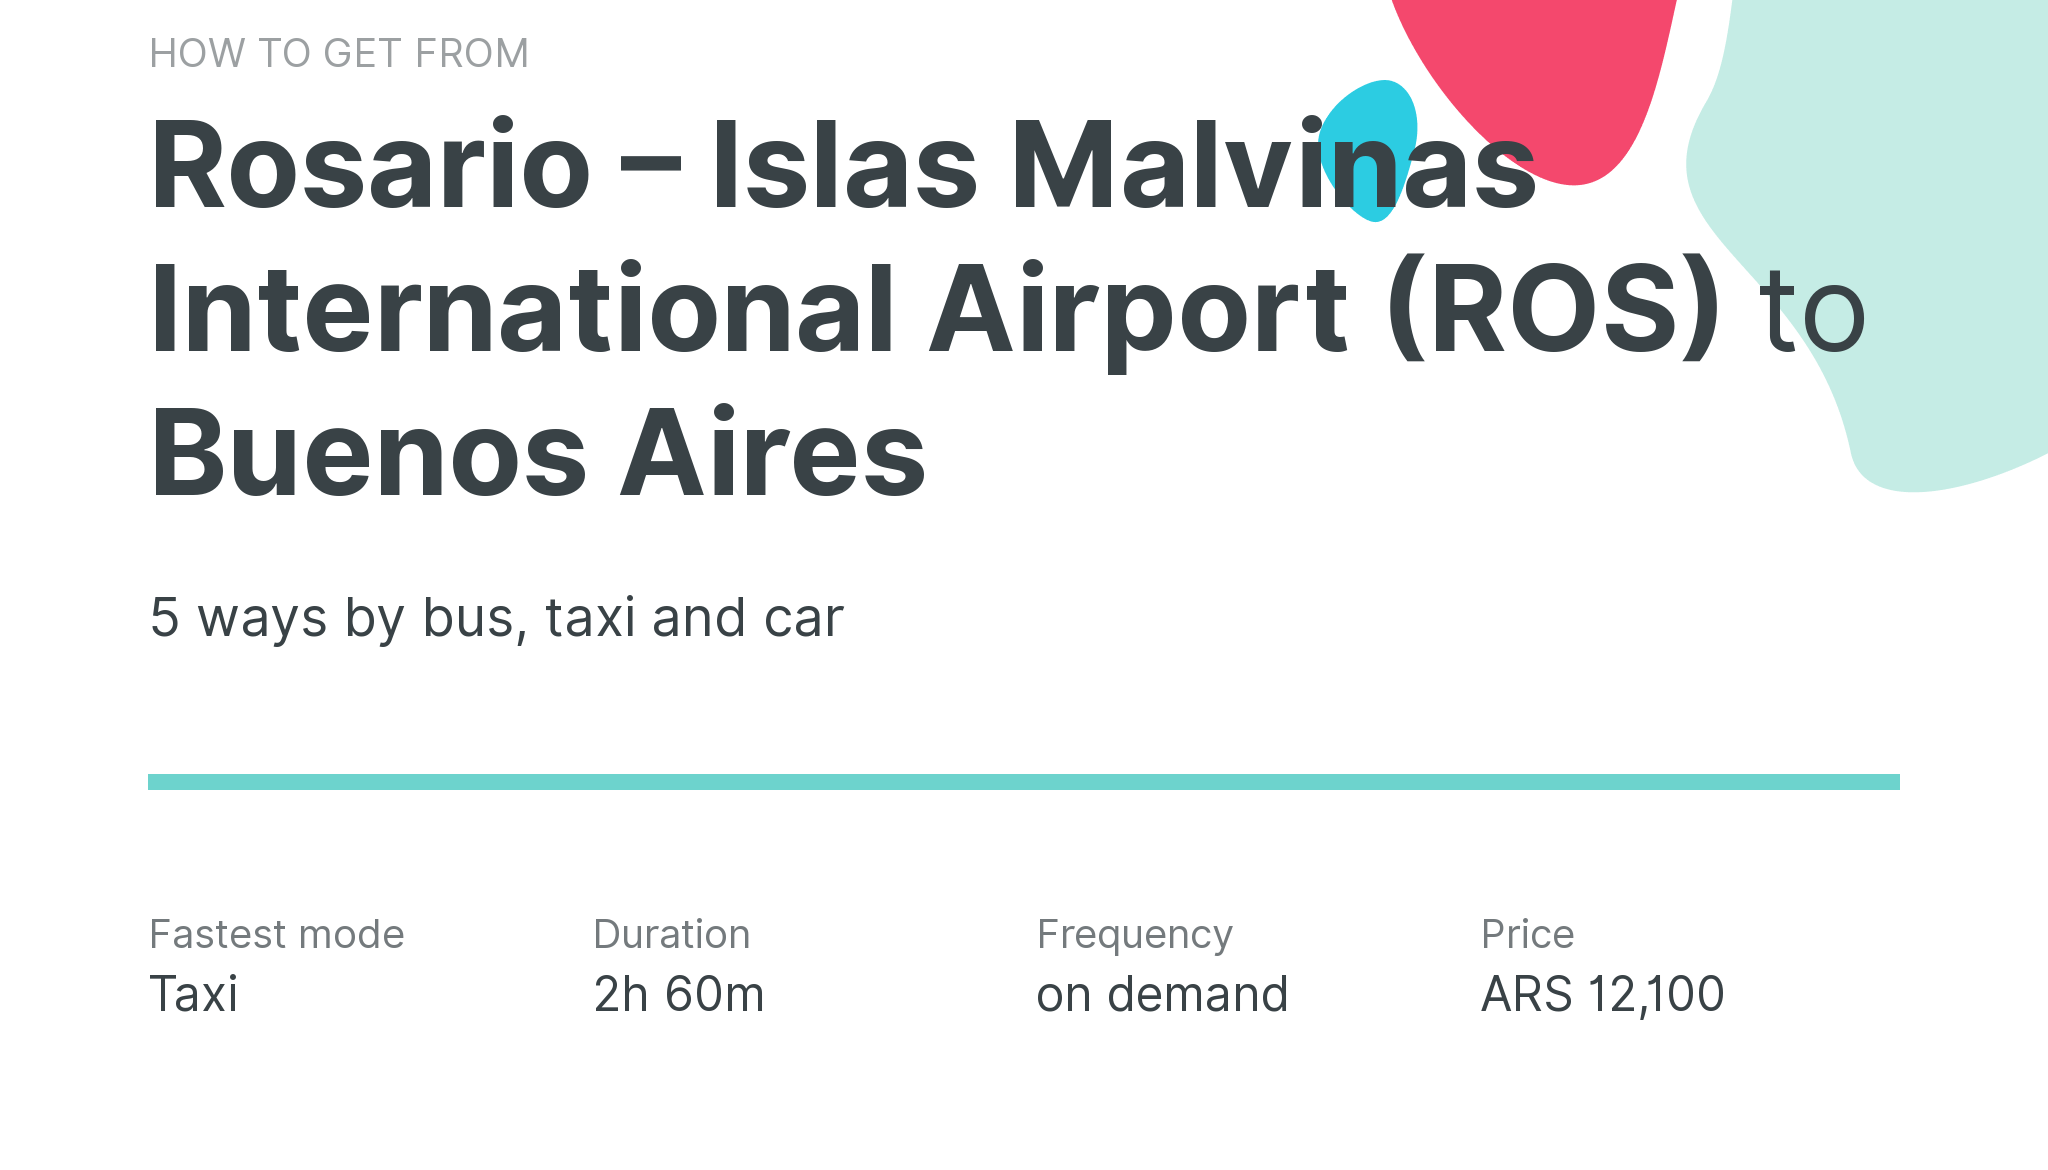 How do I get from Rosario – Islas Malvinas International Airport (ROS) to Buenos Aires